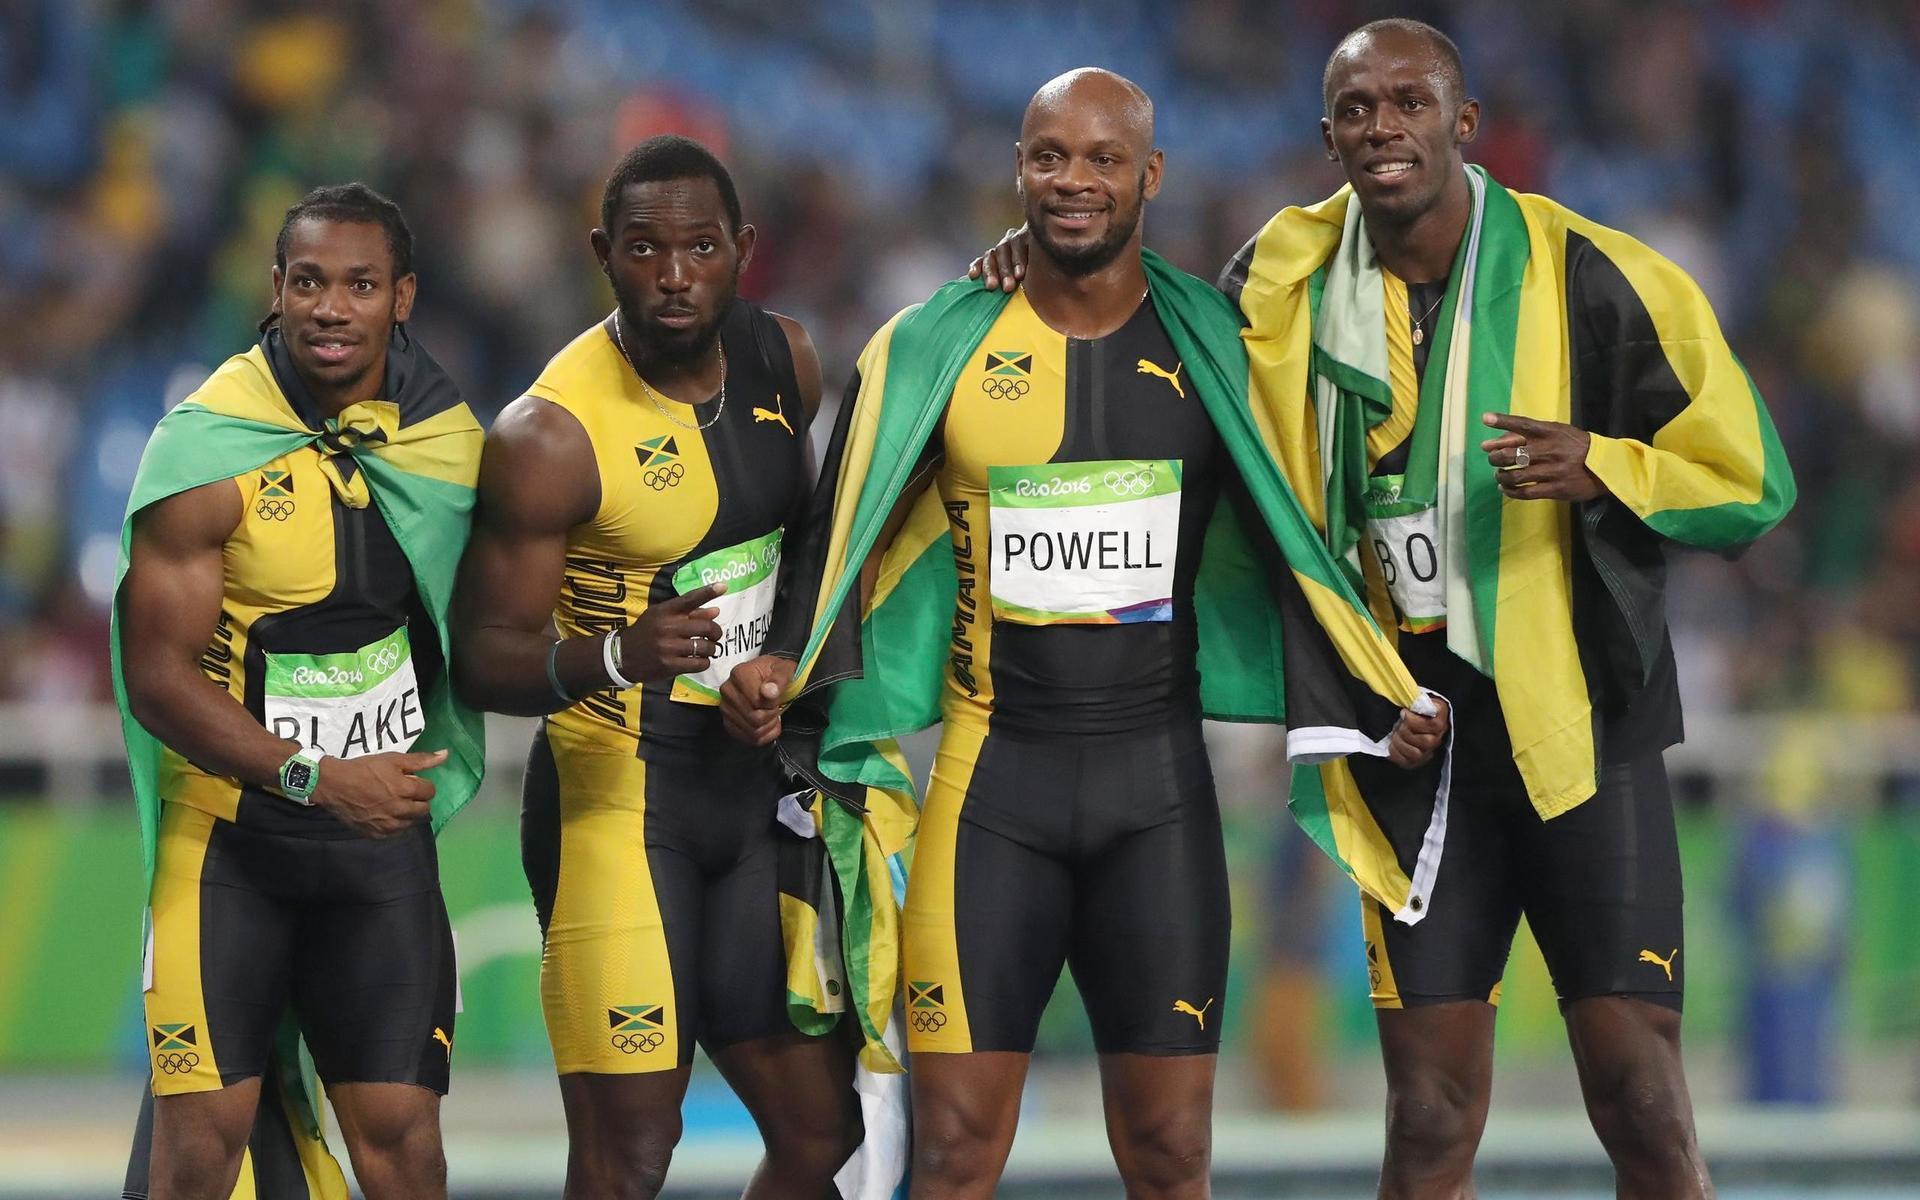 Yohan Blake, Nickel Ashmeade, Asafa Powell och Usain Bolt firar guldet i 4x100-meter under OS 2016 i Rio de. Arkivbild.